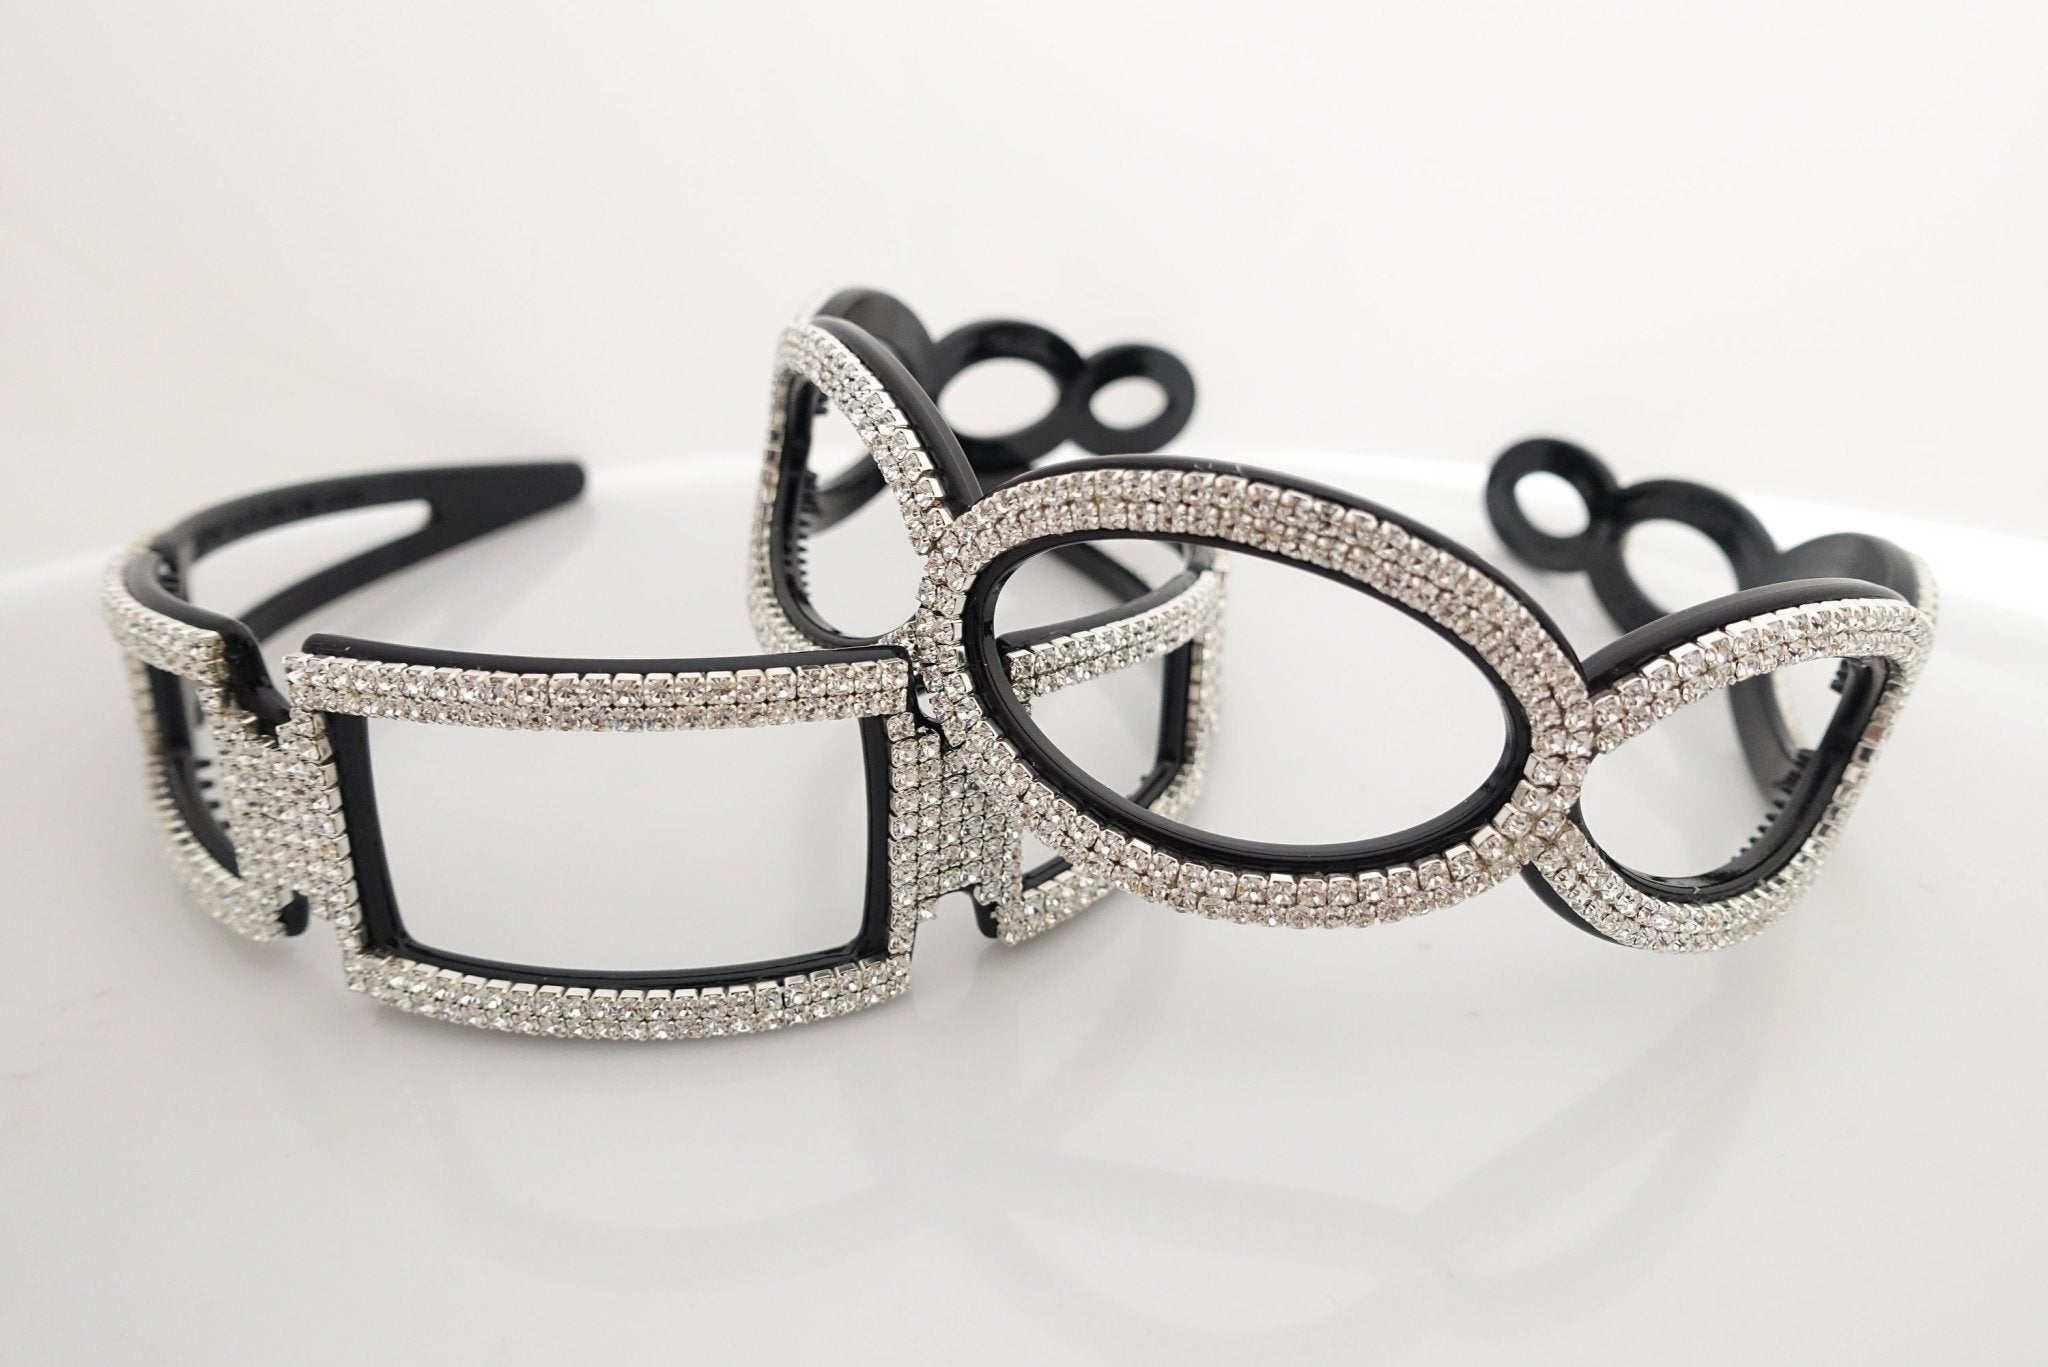 rhinestone decorated headband geometric frame jeweled hairband hair accessory for women - veryshine.com